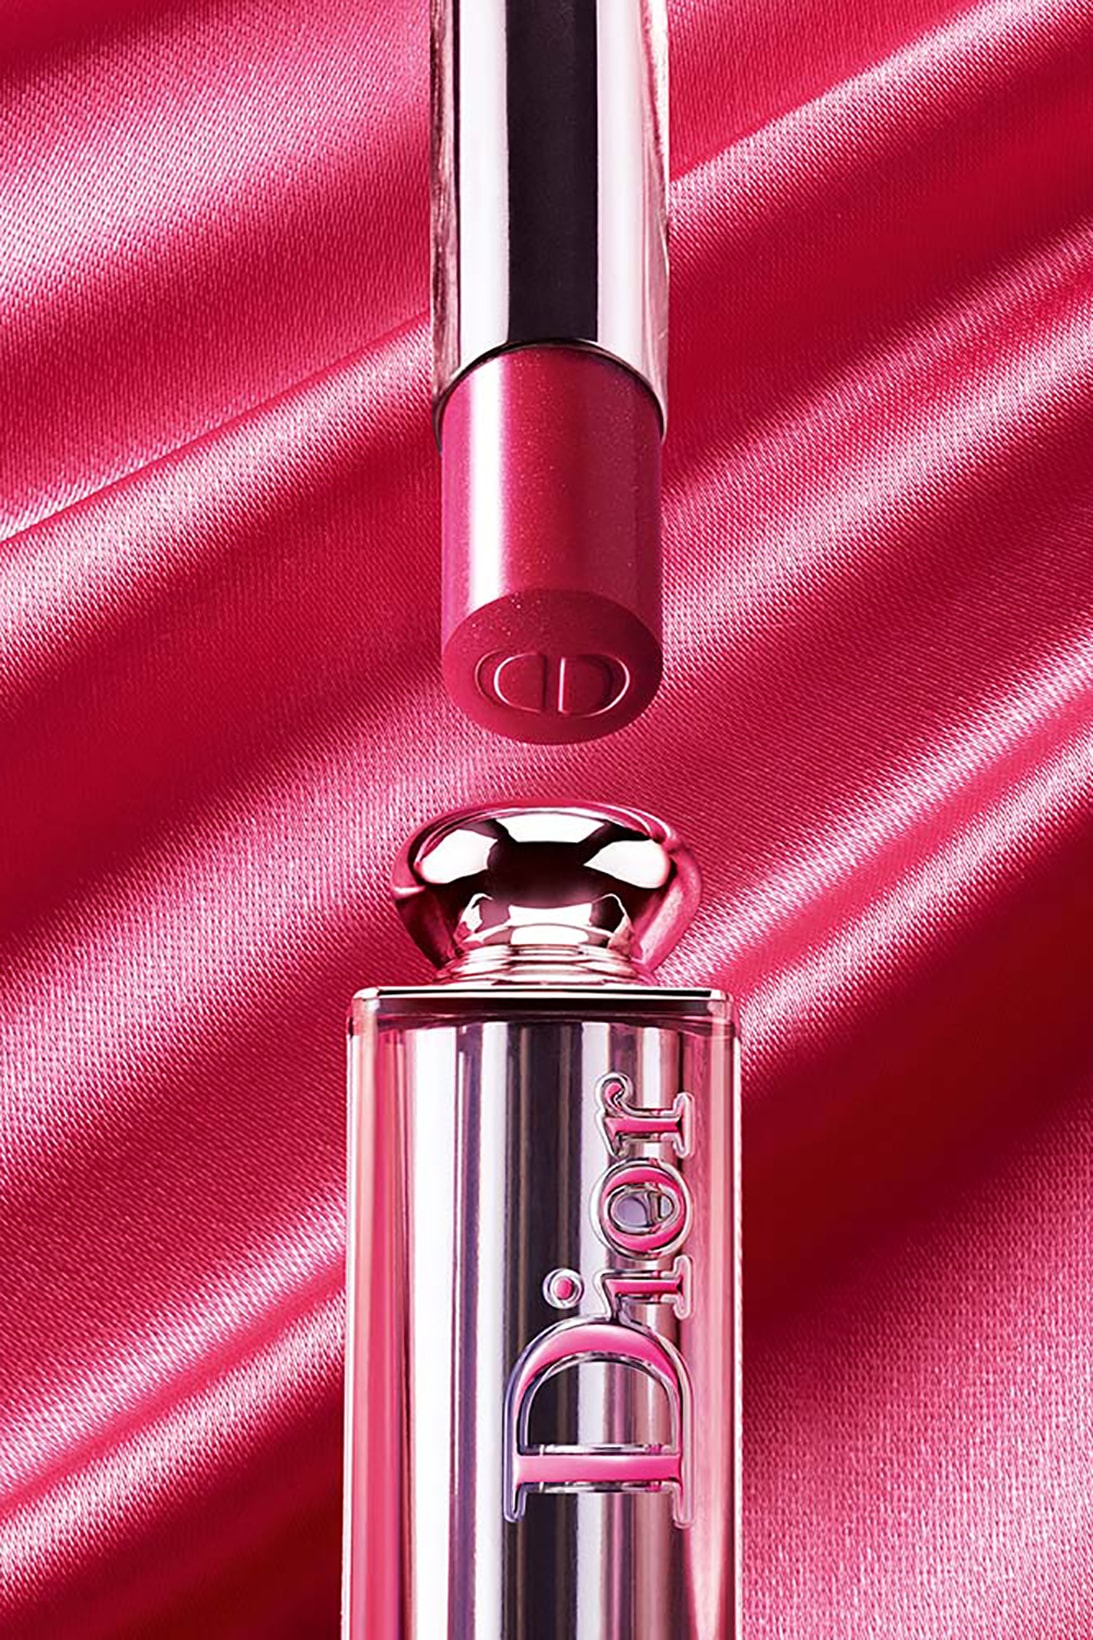 dior beauty addict stellar shine lipsticks pink red cara delevingne makeup